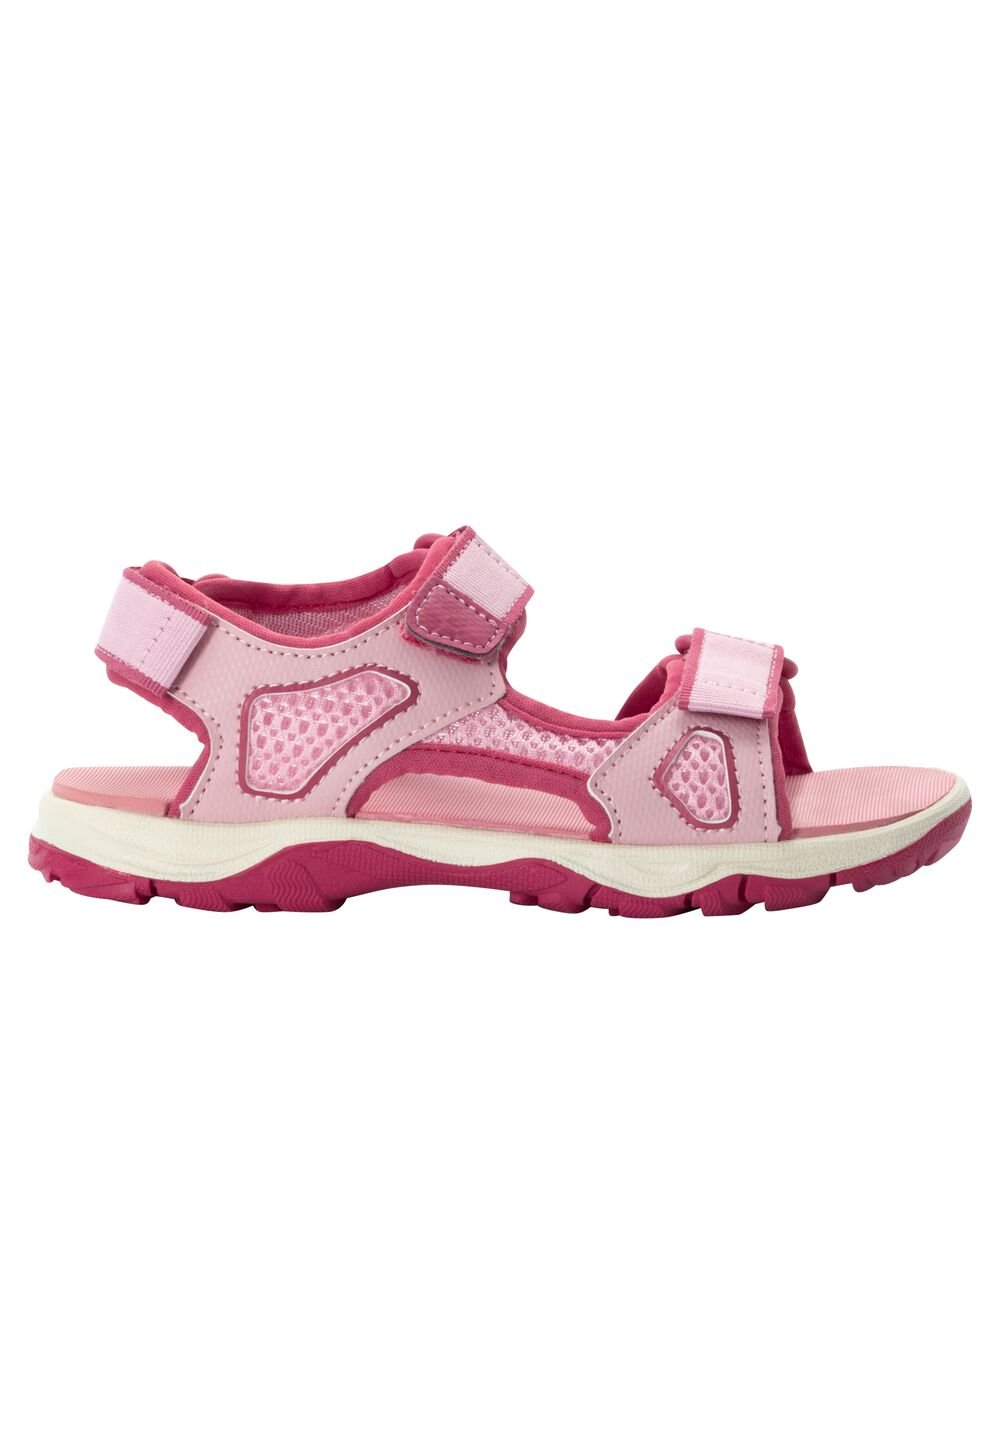 Jack Wolfskin Taraco Beach Sandal Kids Kinderen sandalen 30 soft pink soft pink